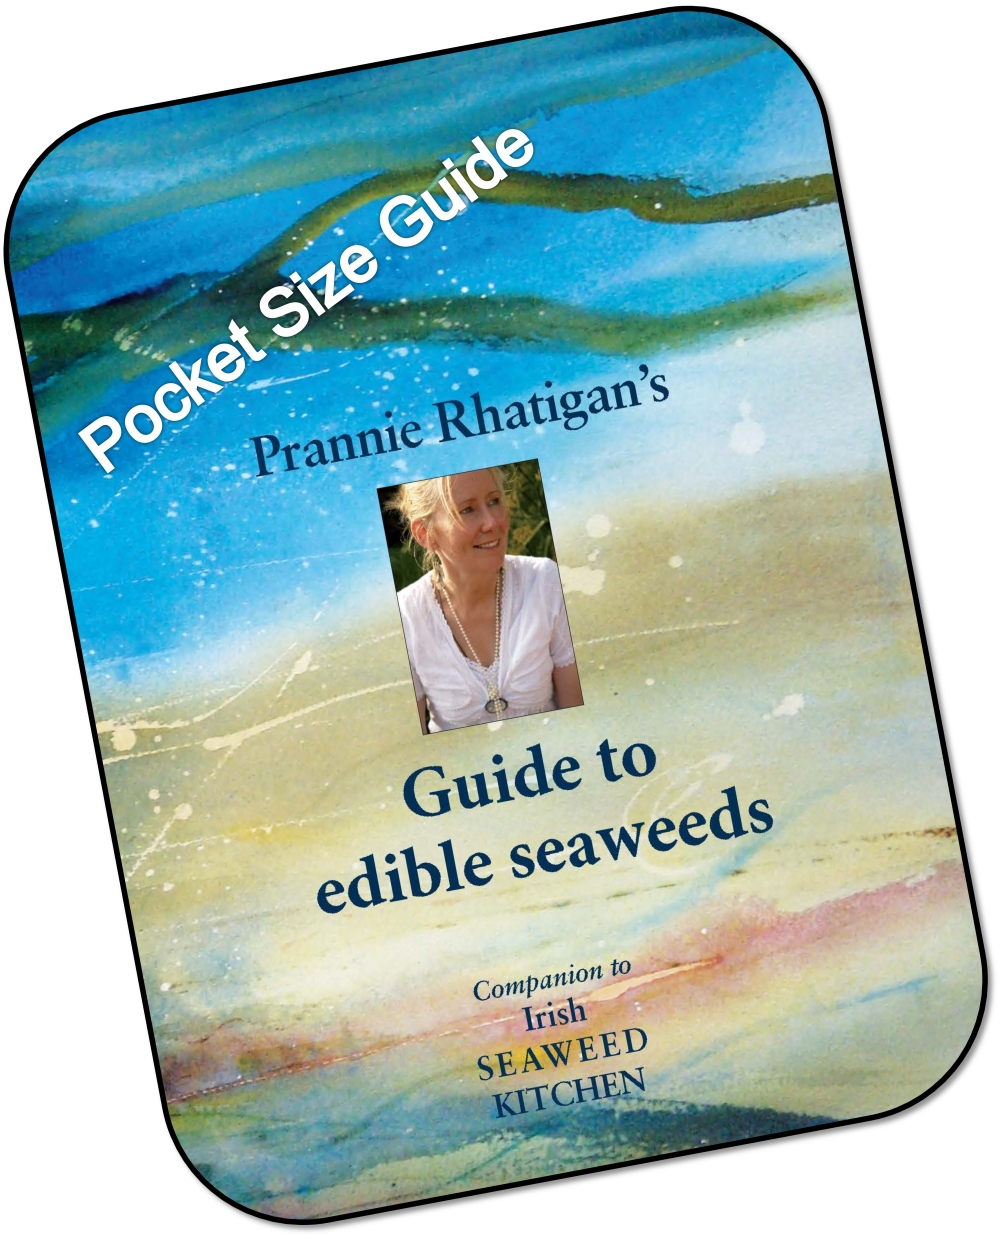 Guide to edible seaweeds